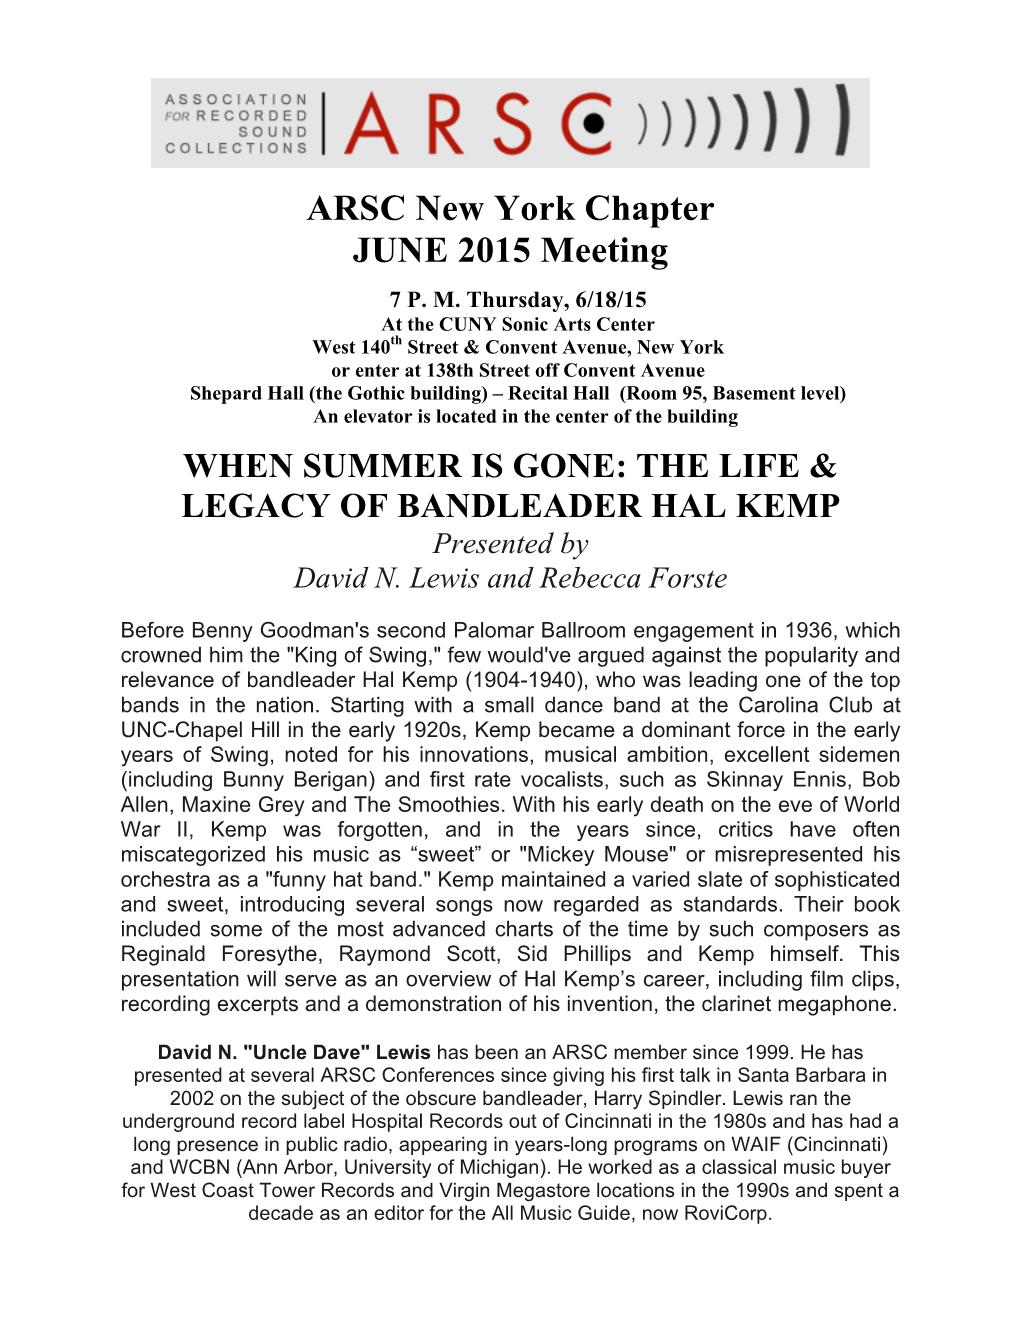 ARSC New York Chapter JUNE 2015 Meeting